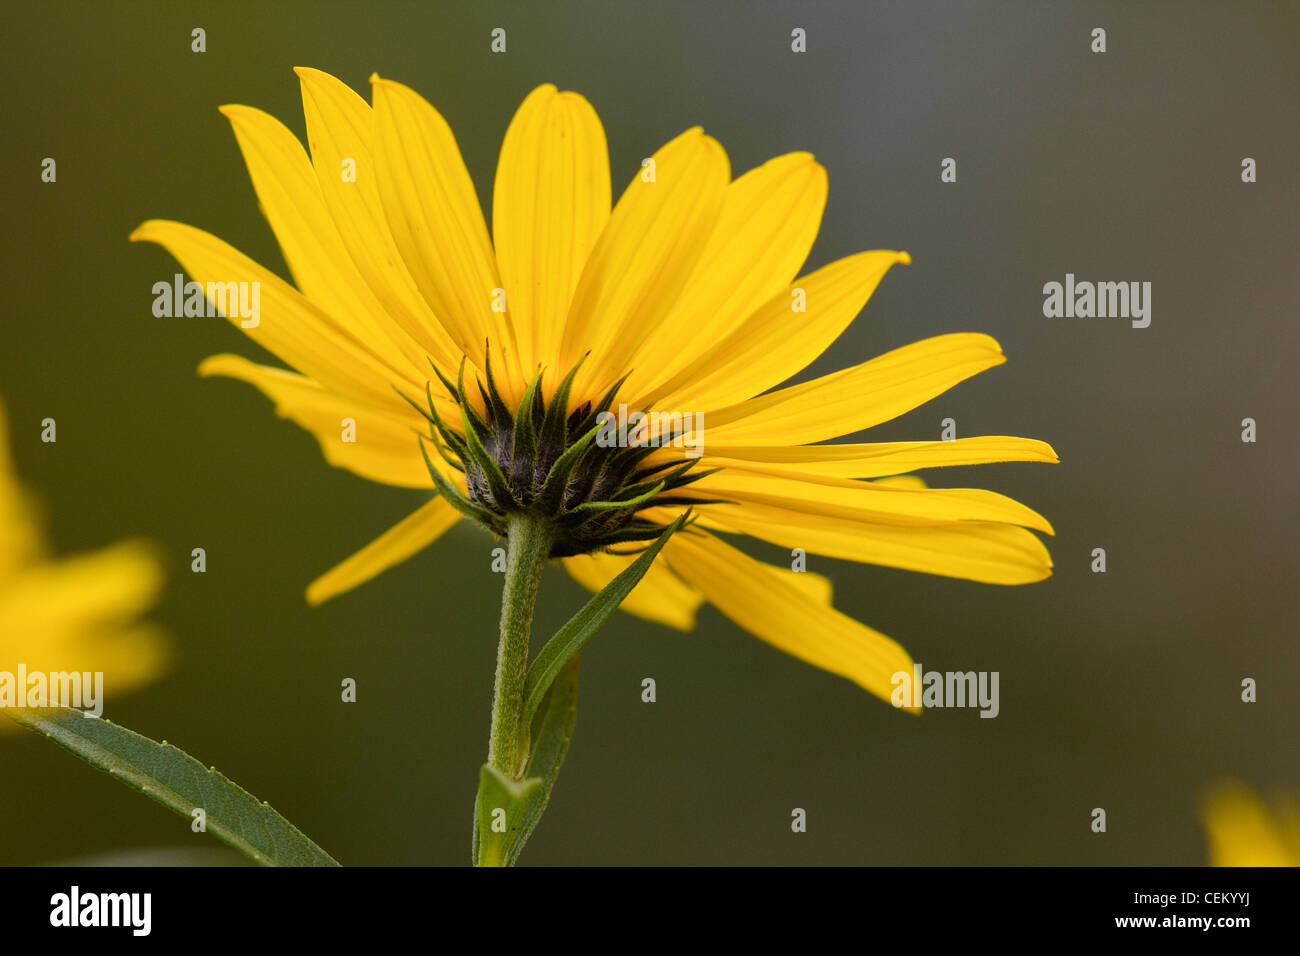 Giant sunflower Stock Photo